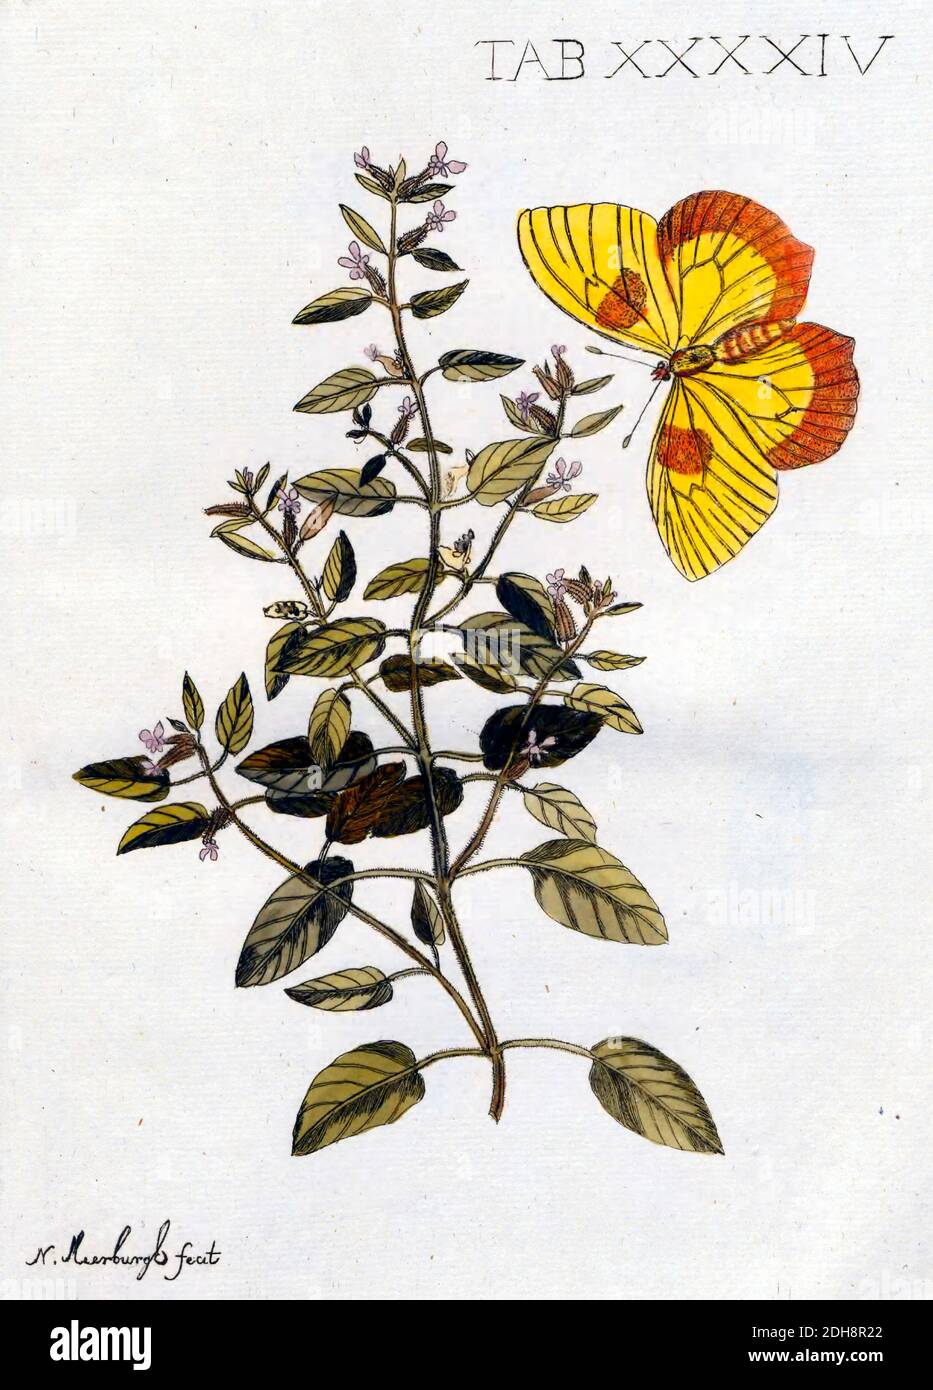 Plantæ rariores vivis coloribus depictæ [Rare plants painted in vivid colors] by Meerburg, Nicolaus (Nicolaas), 1734-1814. Published in 1789 Stock Photo